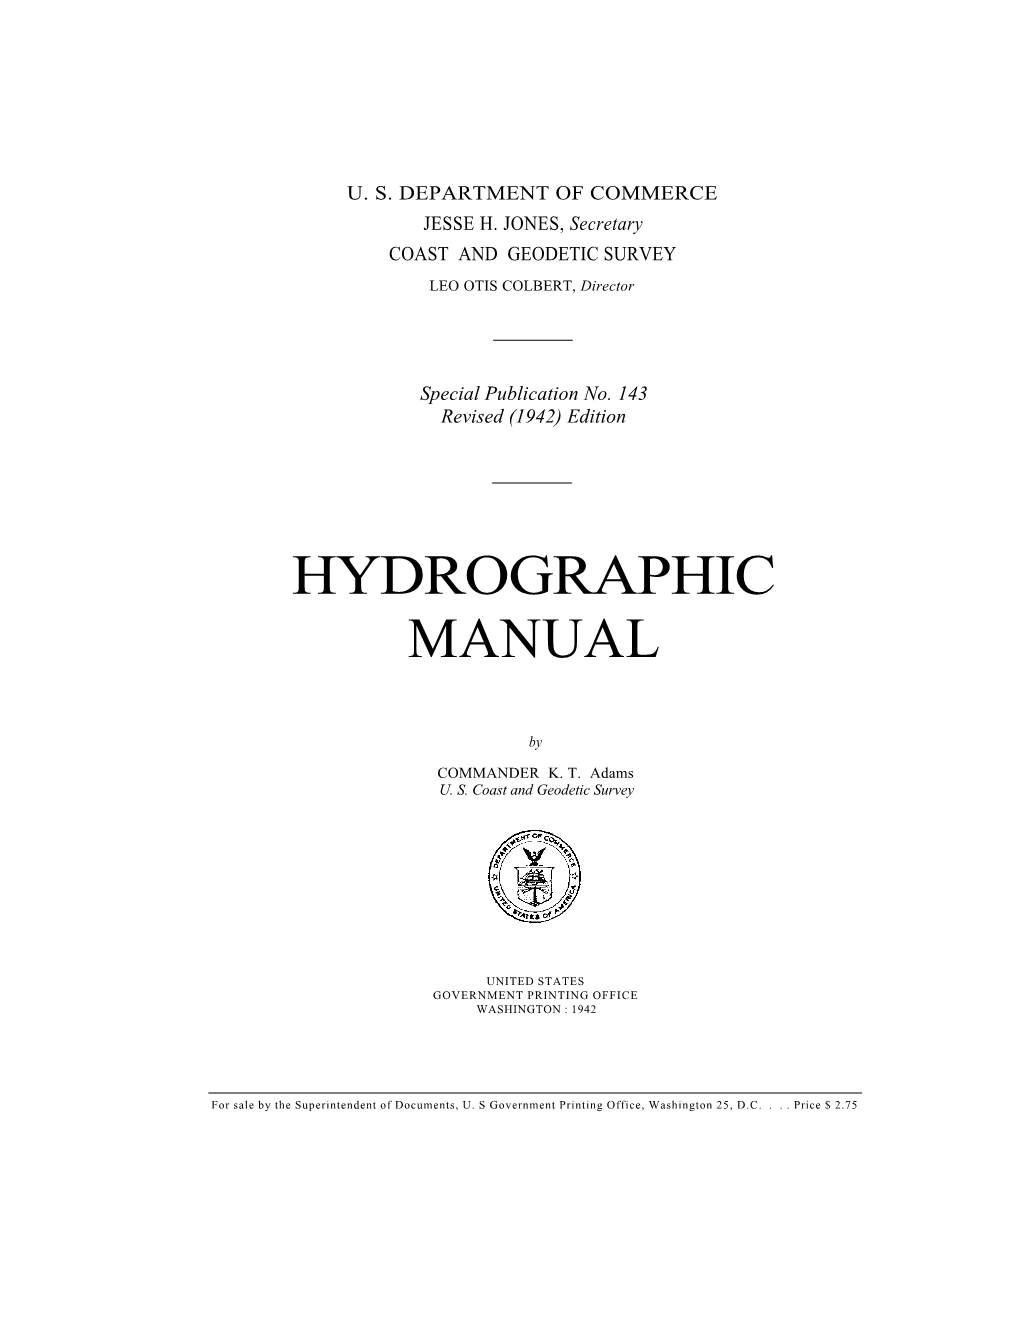 Hydrographic Manual